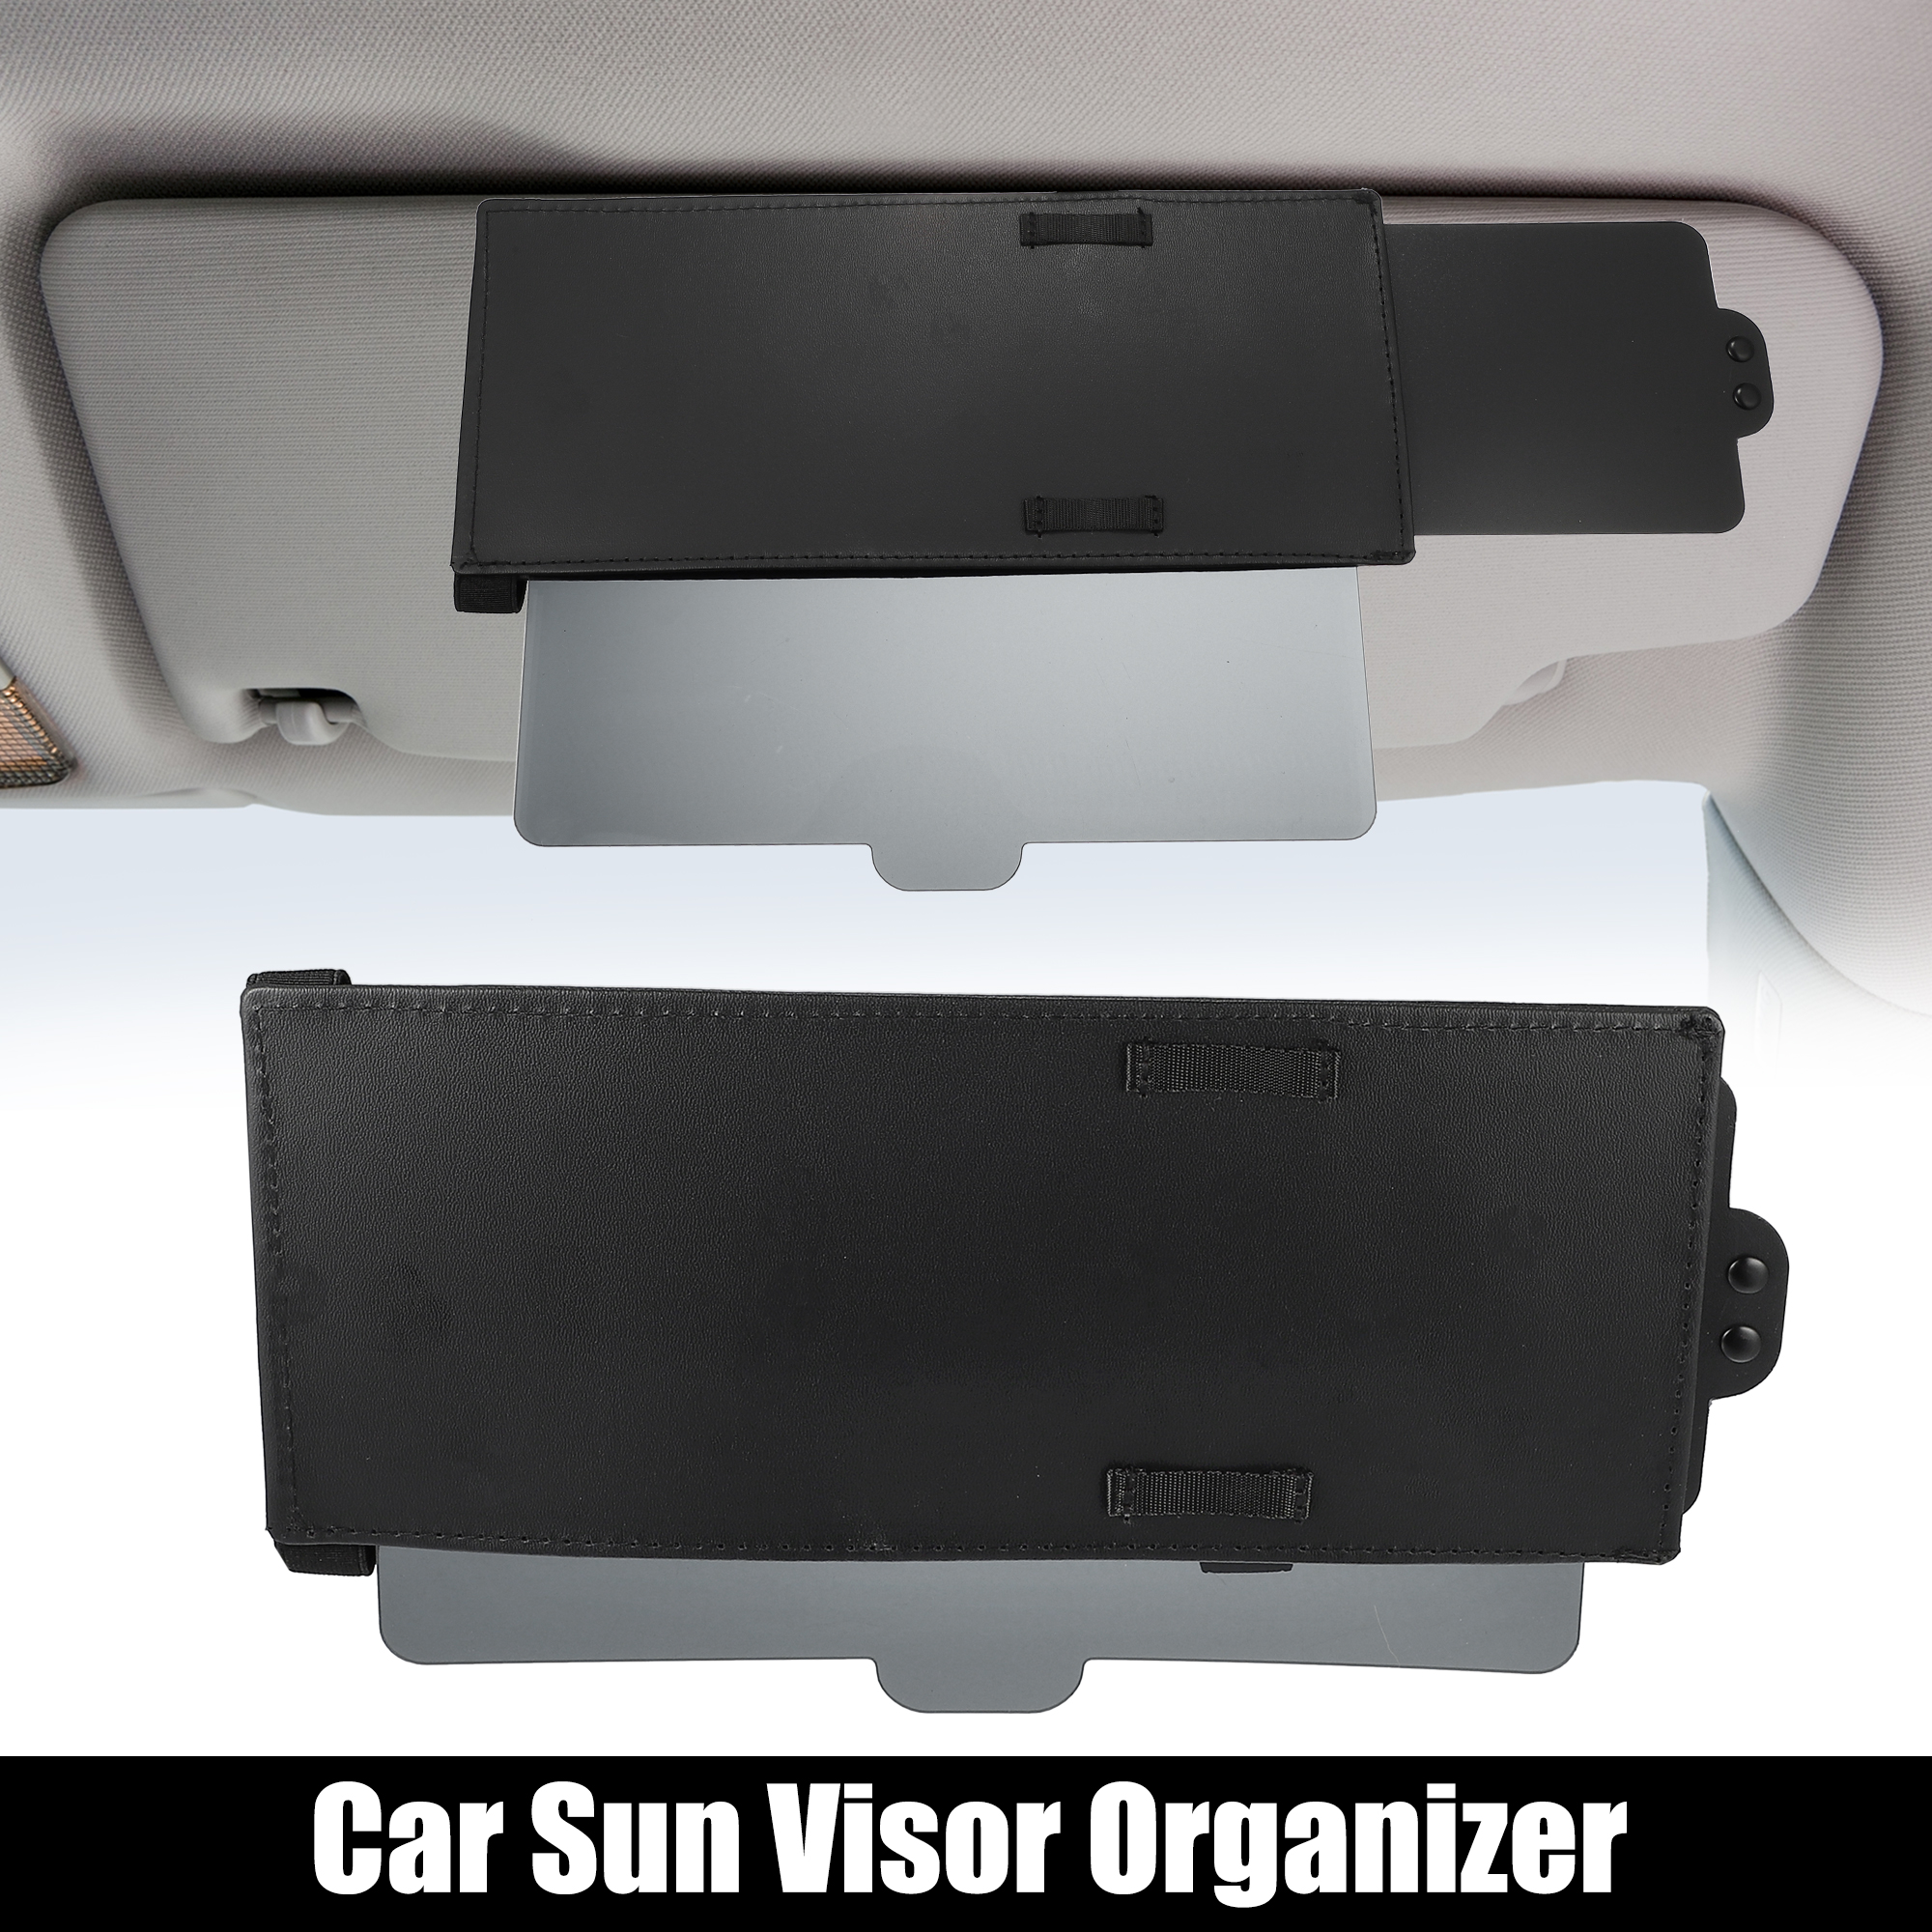 Unique Bargains Car Sun Visor Organizer with PC Lens Extension Car Visor for Safe Driving Black